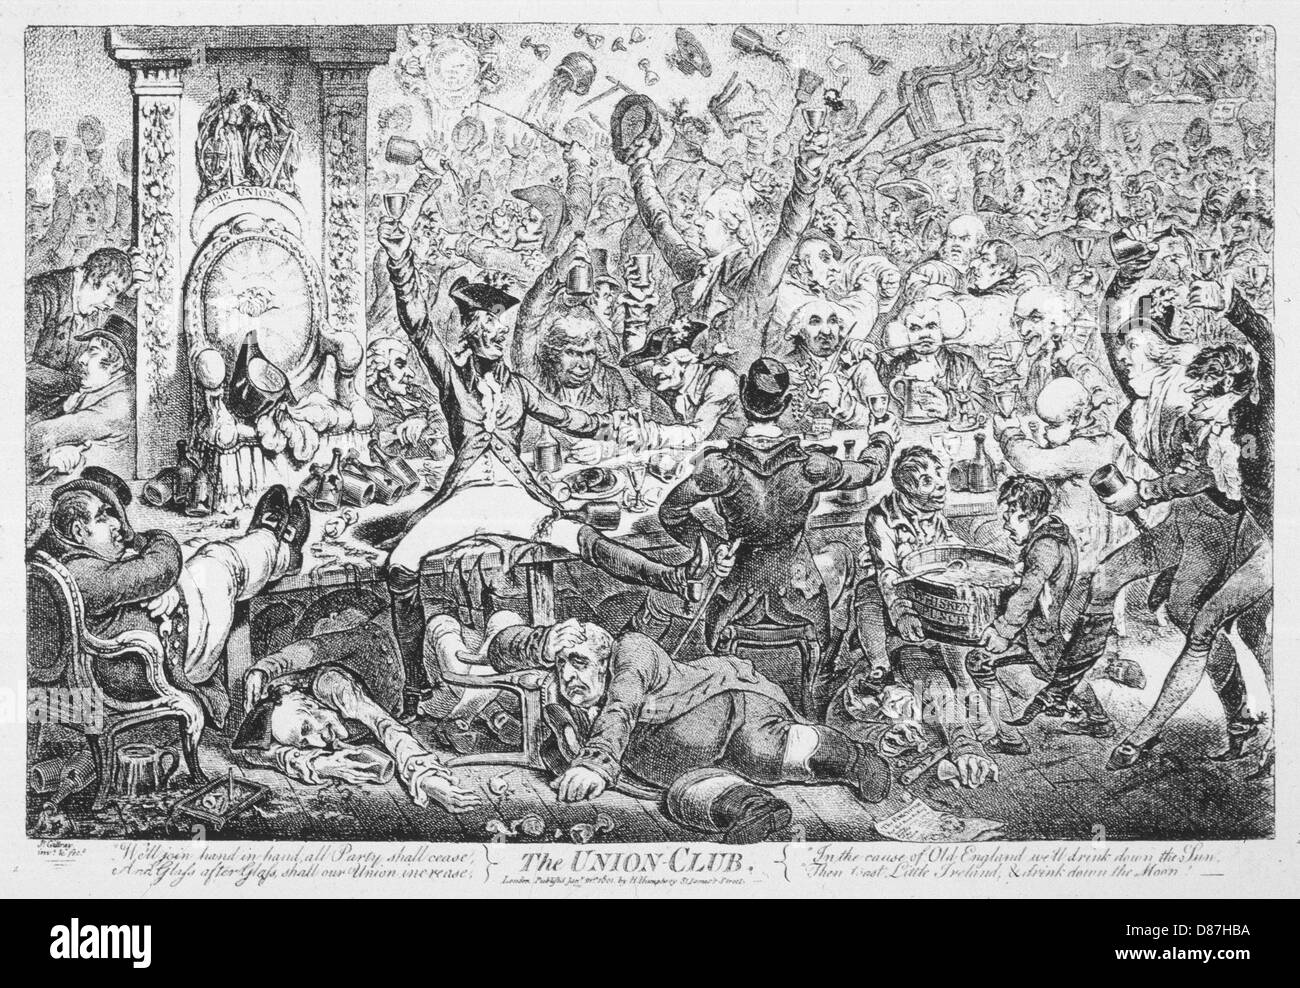 Act of union 1801 -Fotos und -Bildmaterial in hoher Auflösung – Alamy